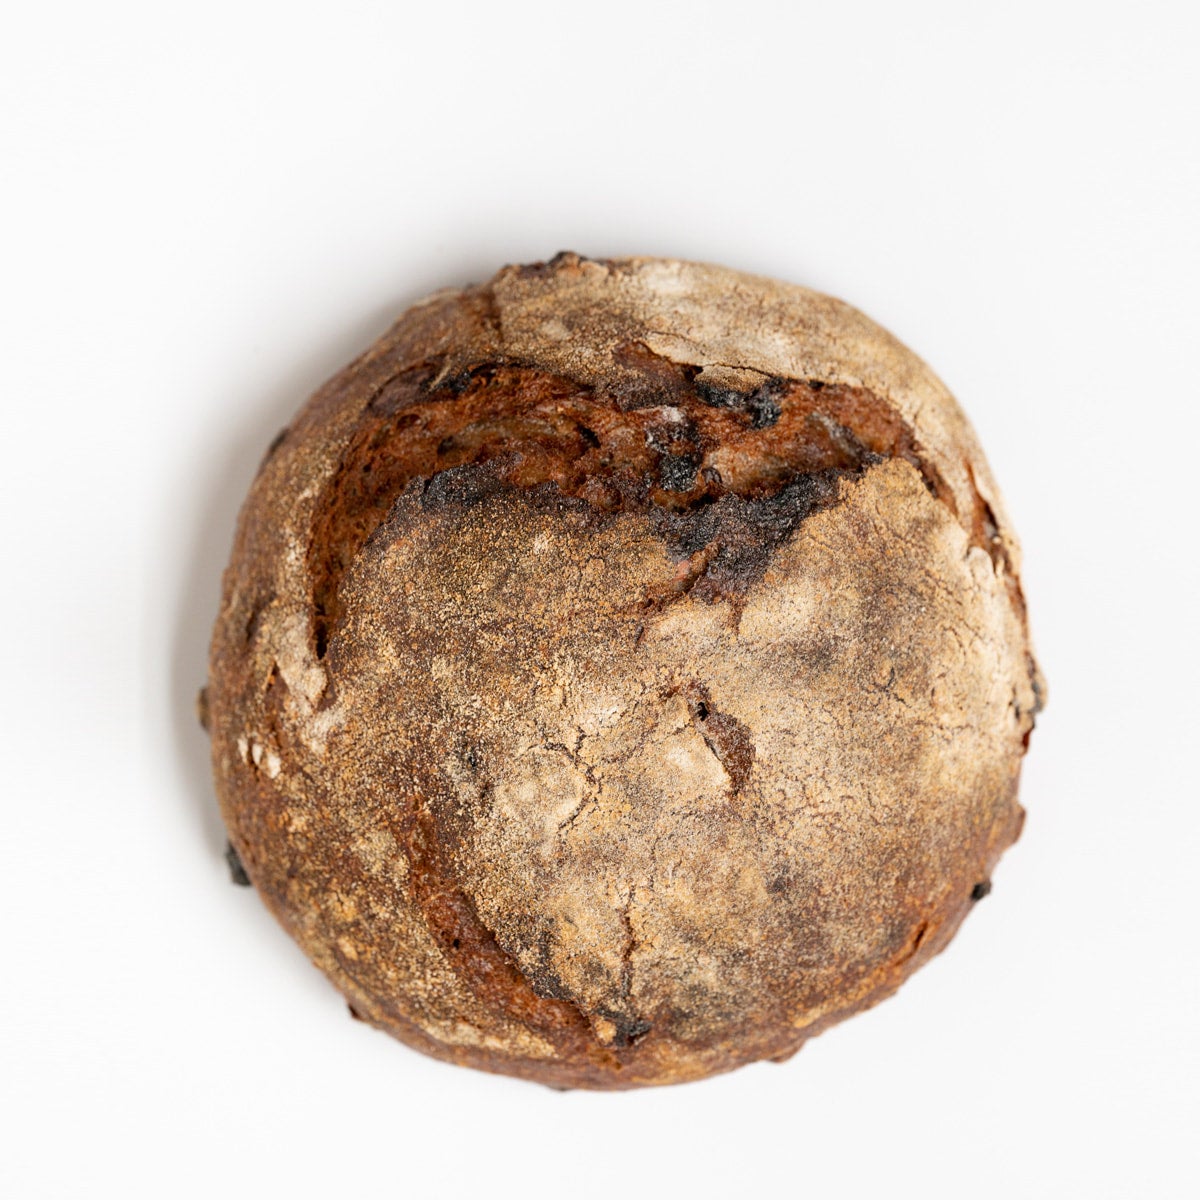 Rye bread with raisins and hazelnuts